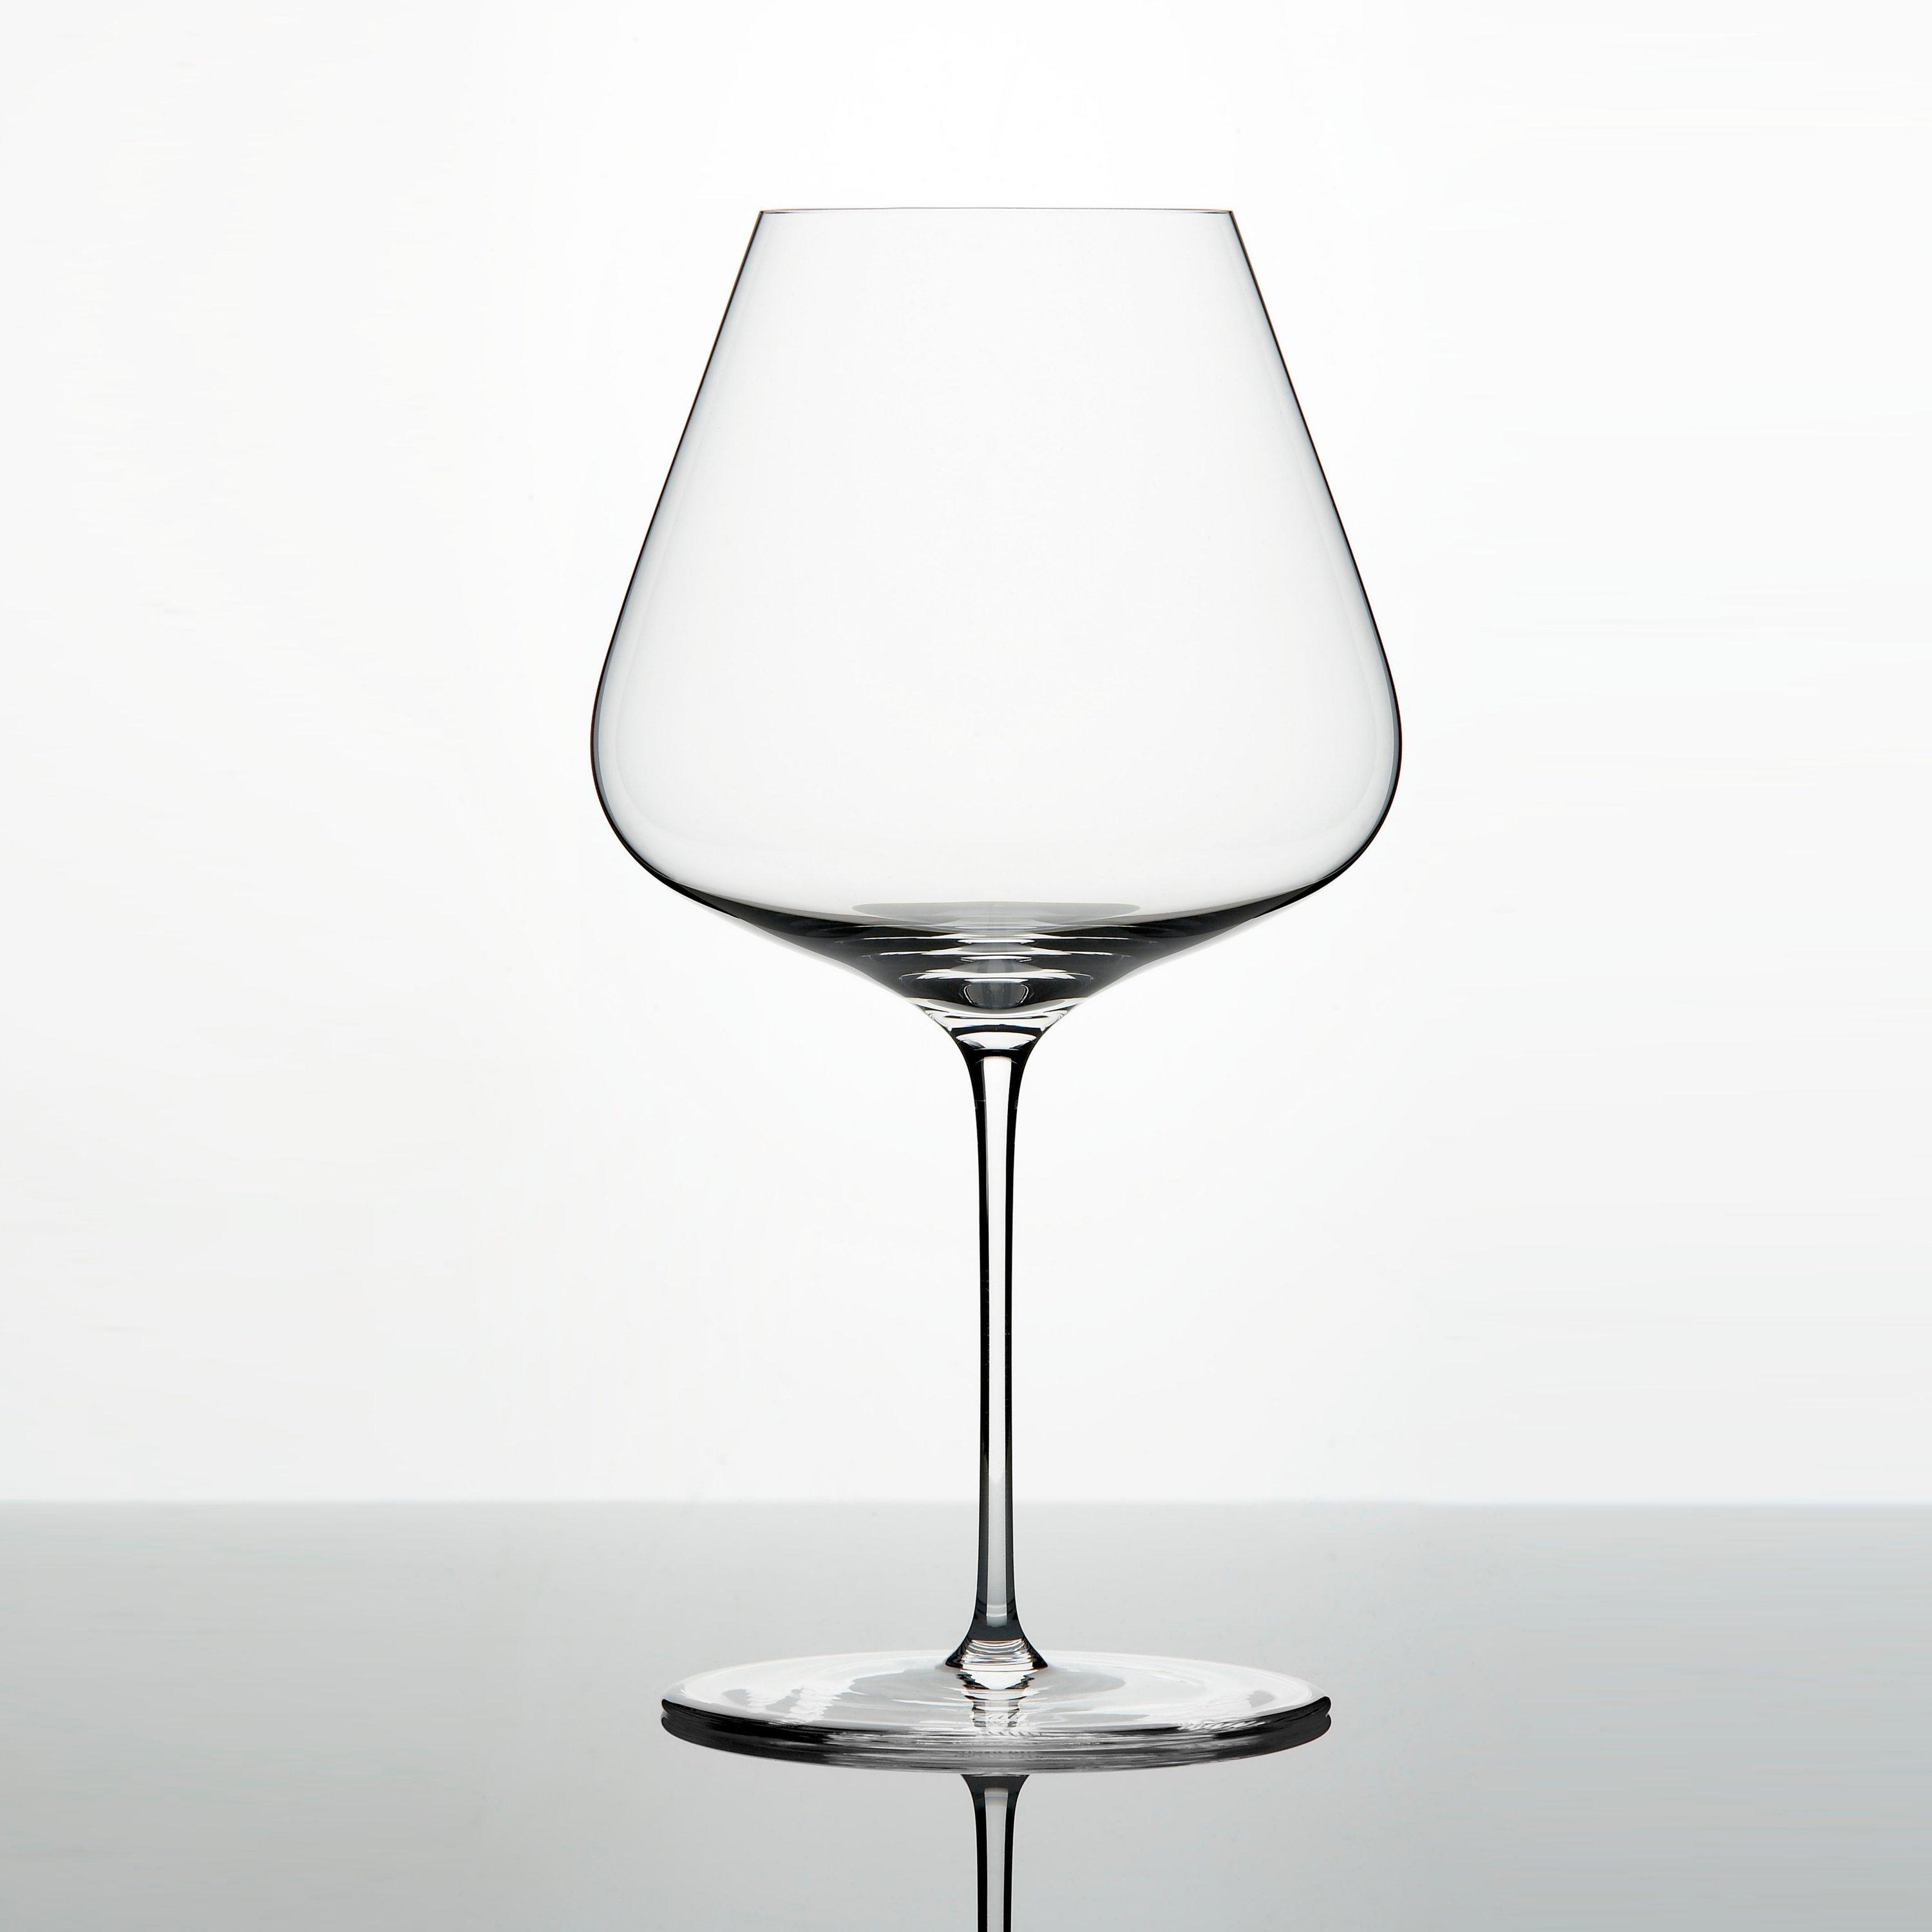 The Best Universal Wineglasses 2023